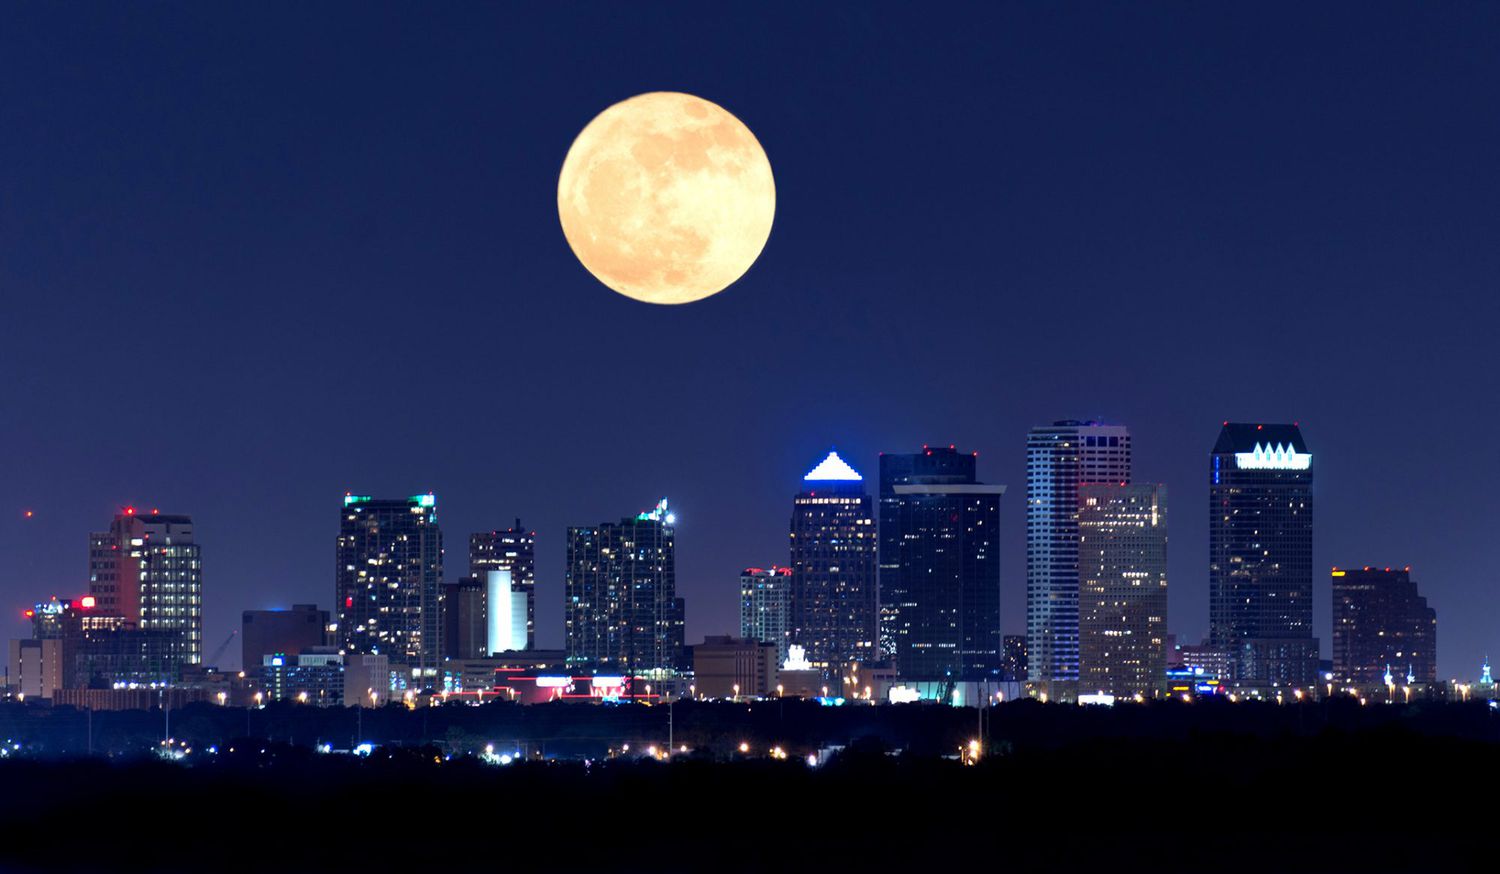 full moon rising over Tampa, Florida skyline at night